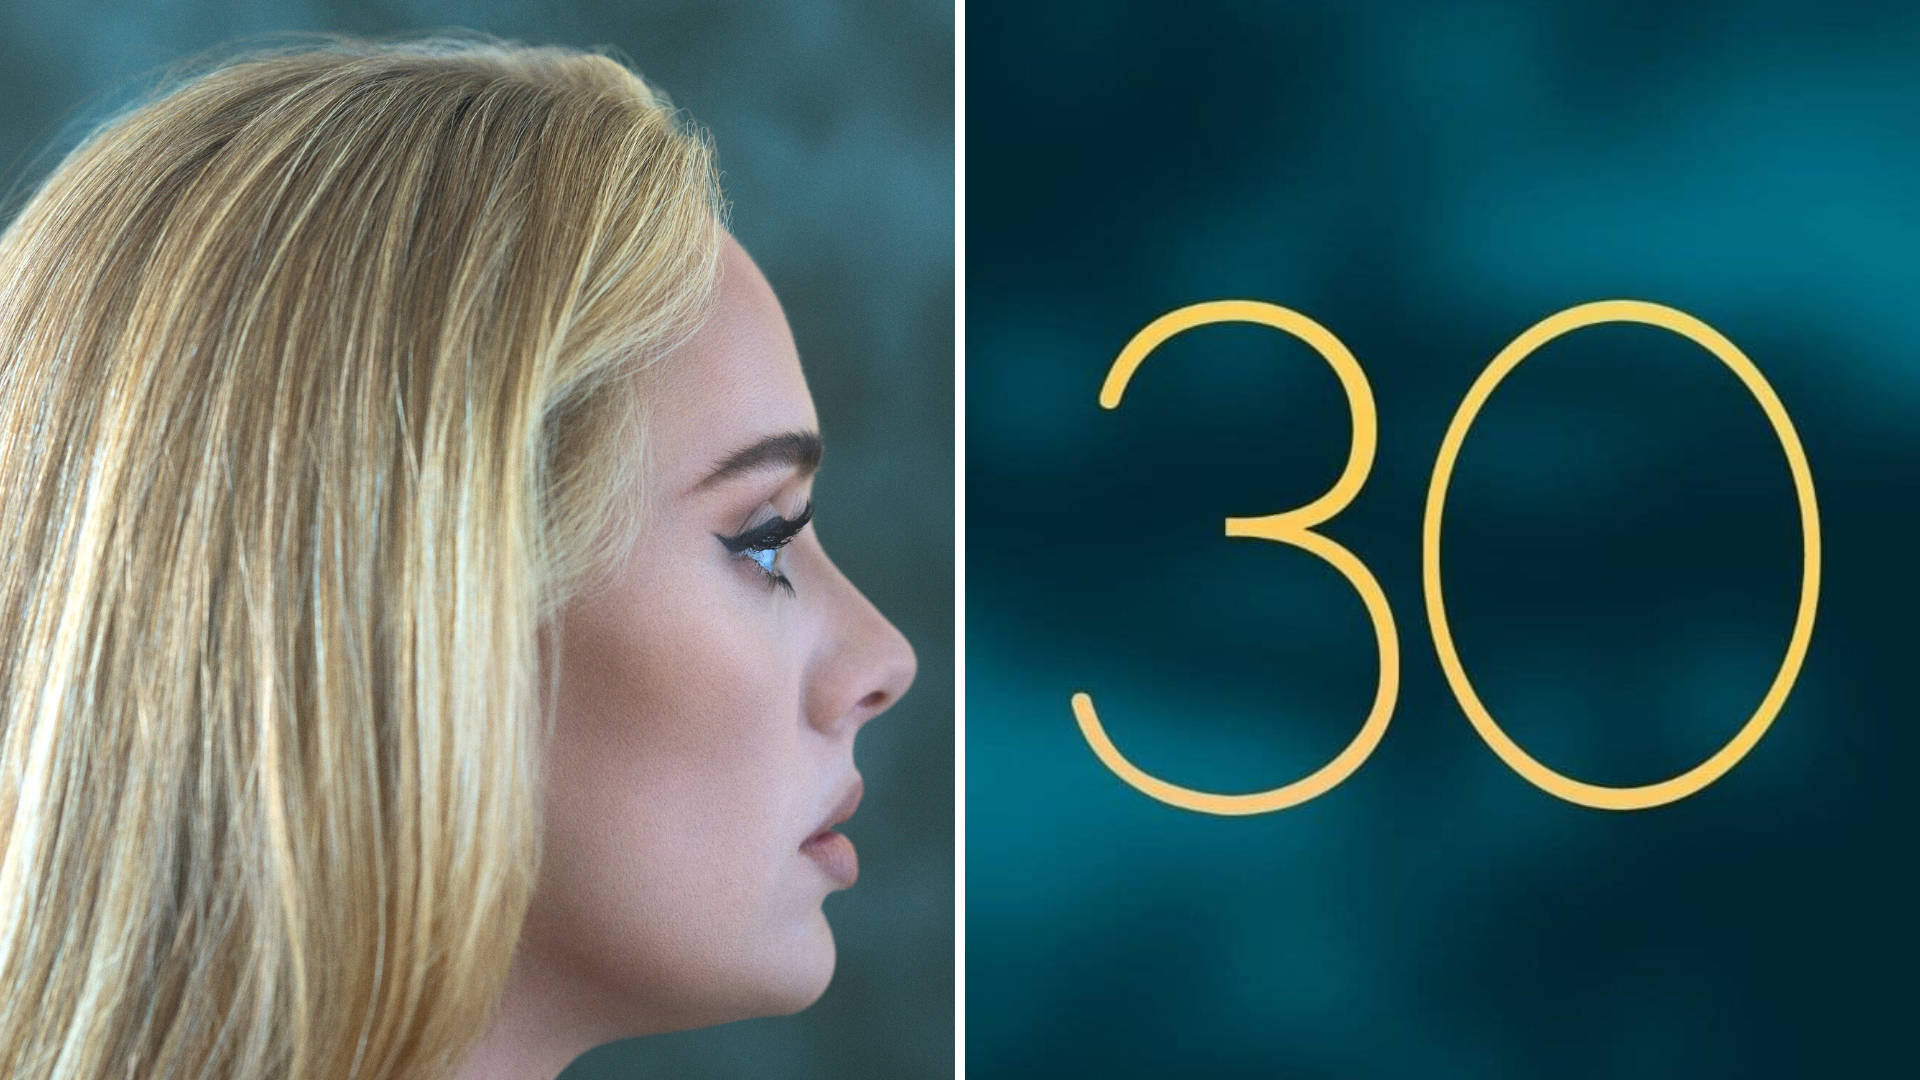 Adele 30